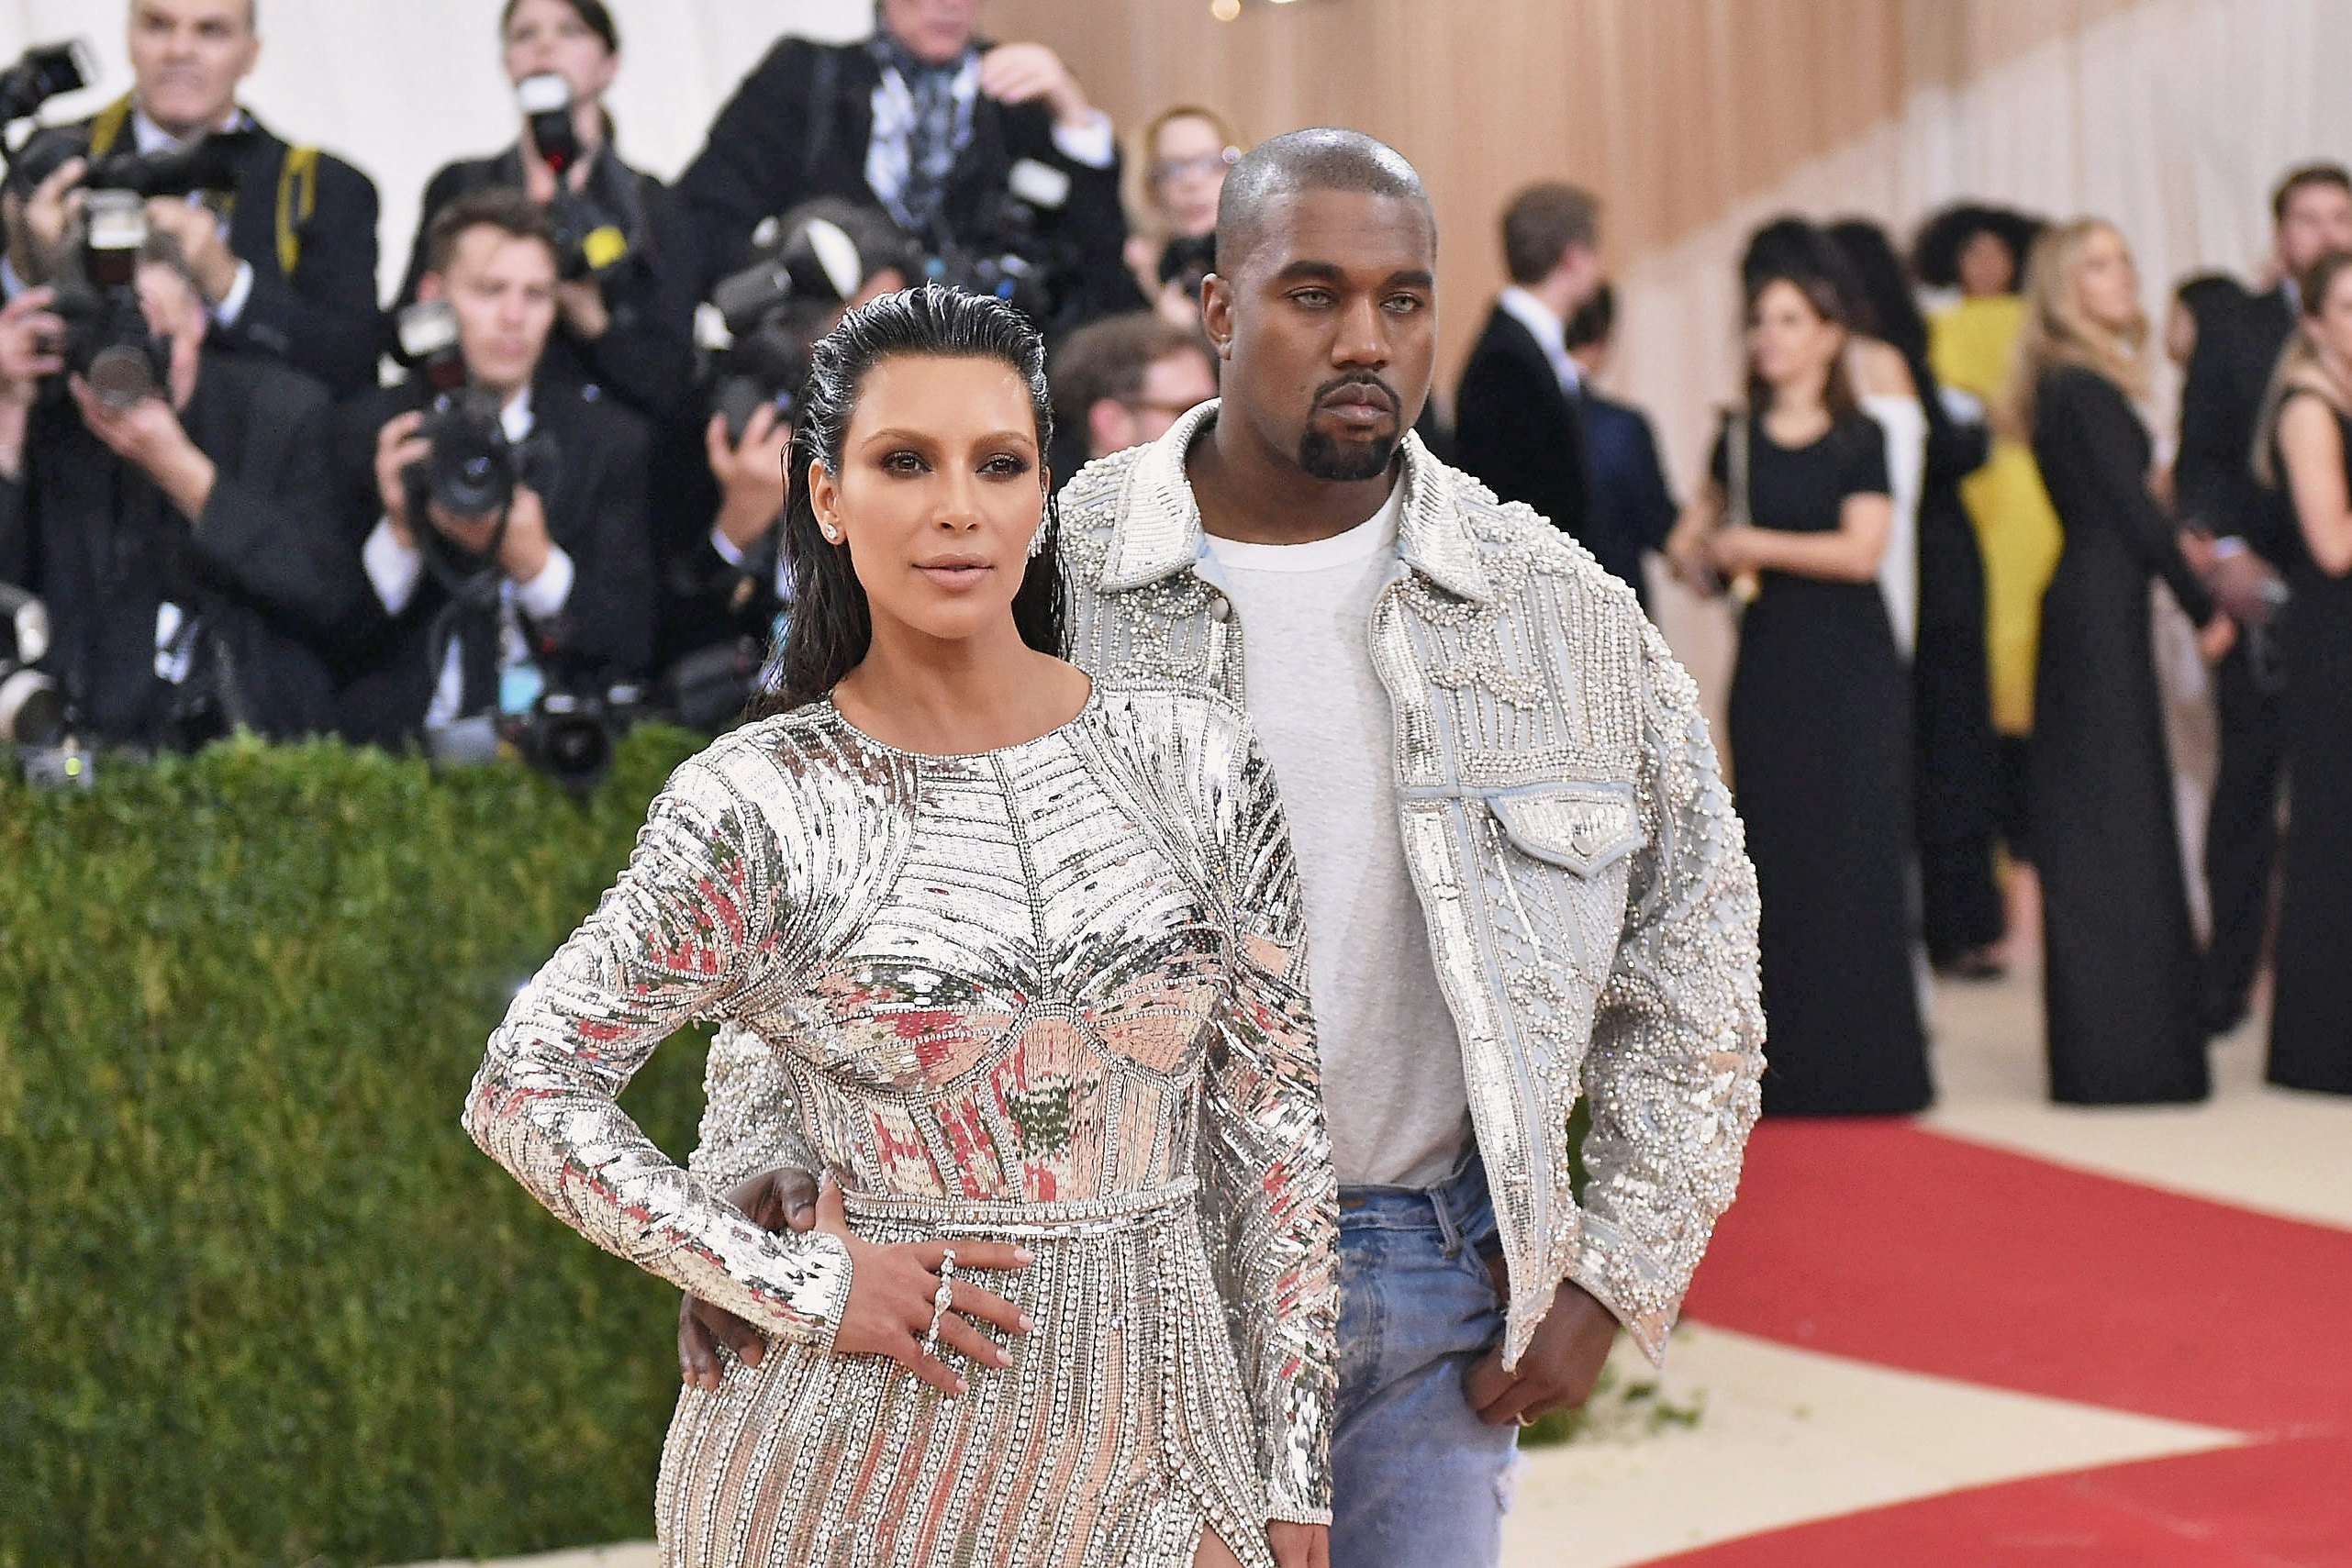 Kim Kardashian and Kanye West Relationship Timeline